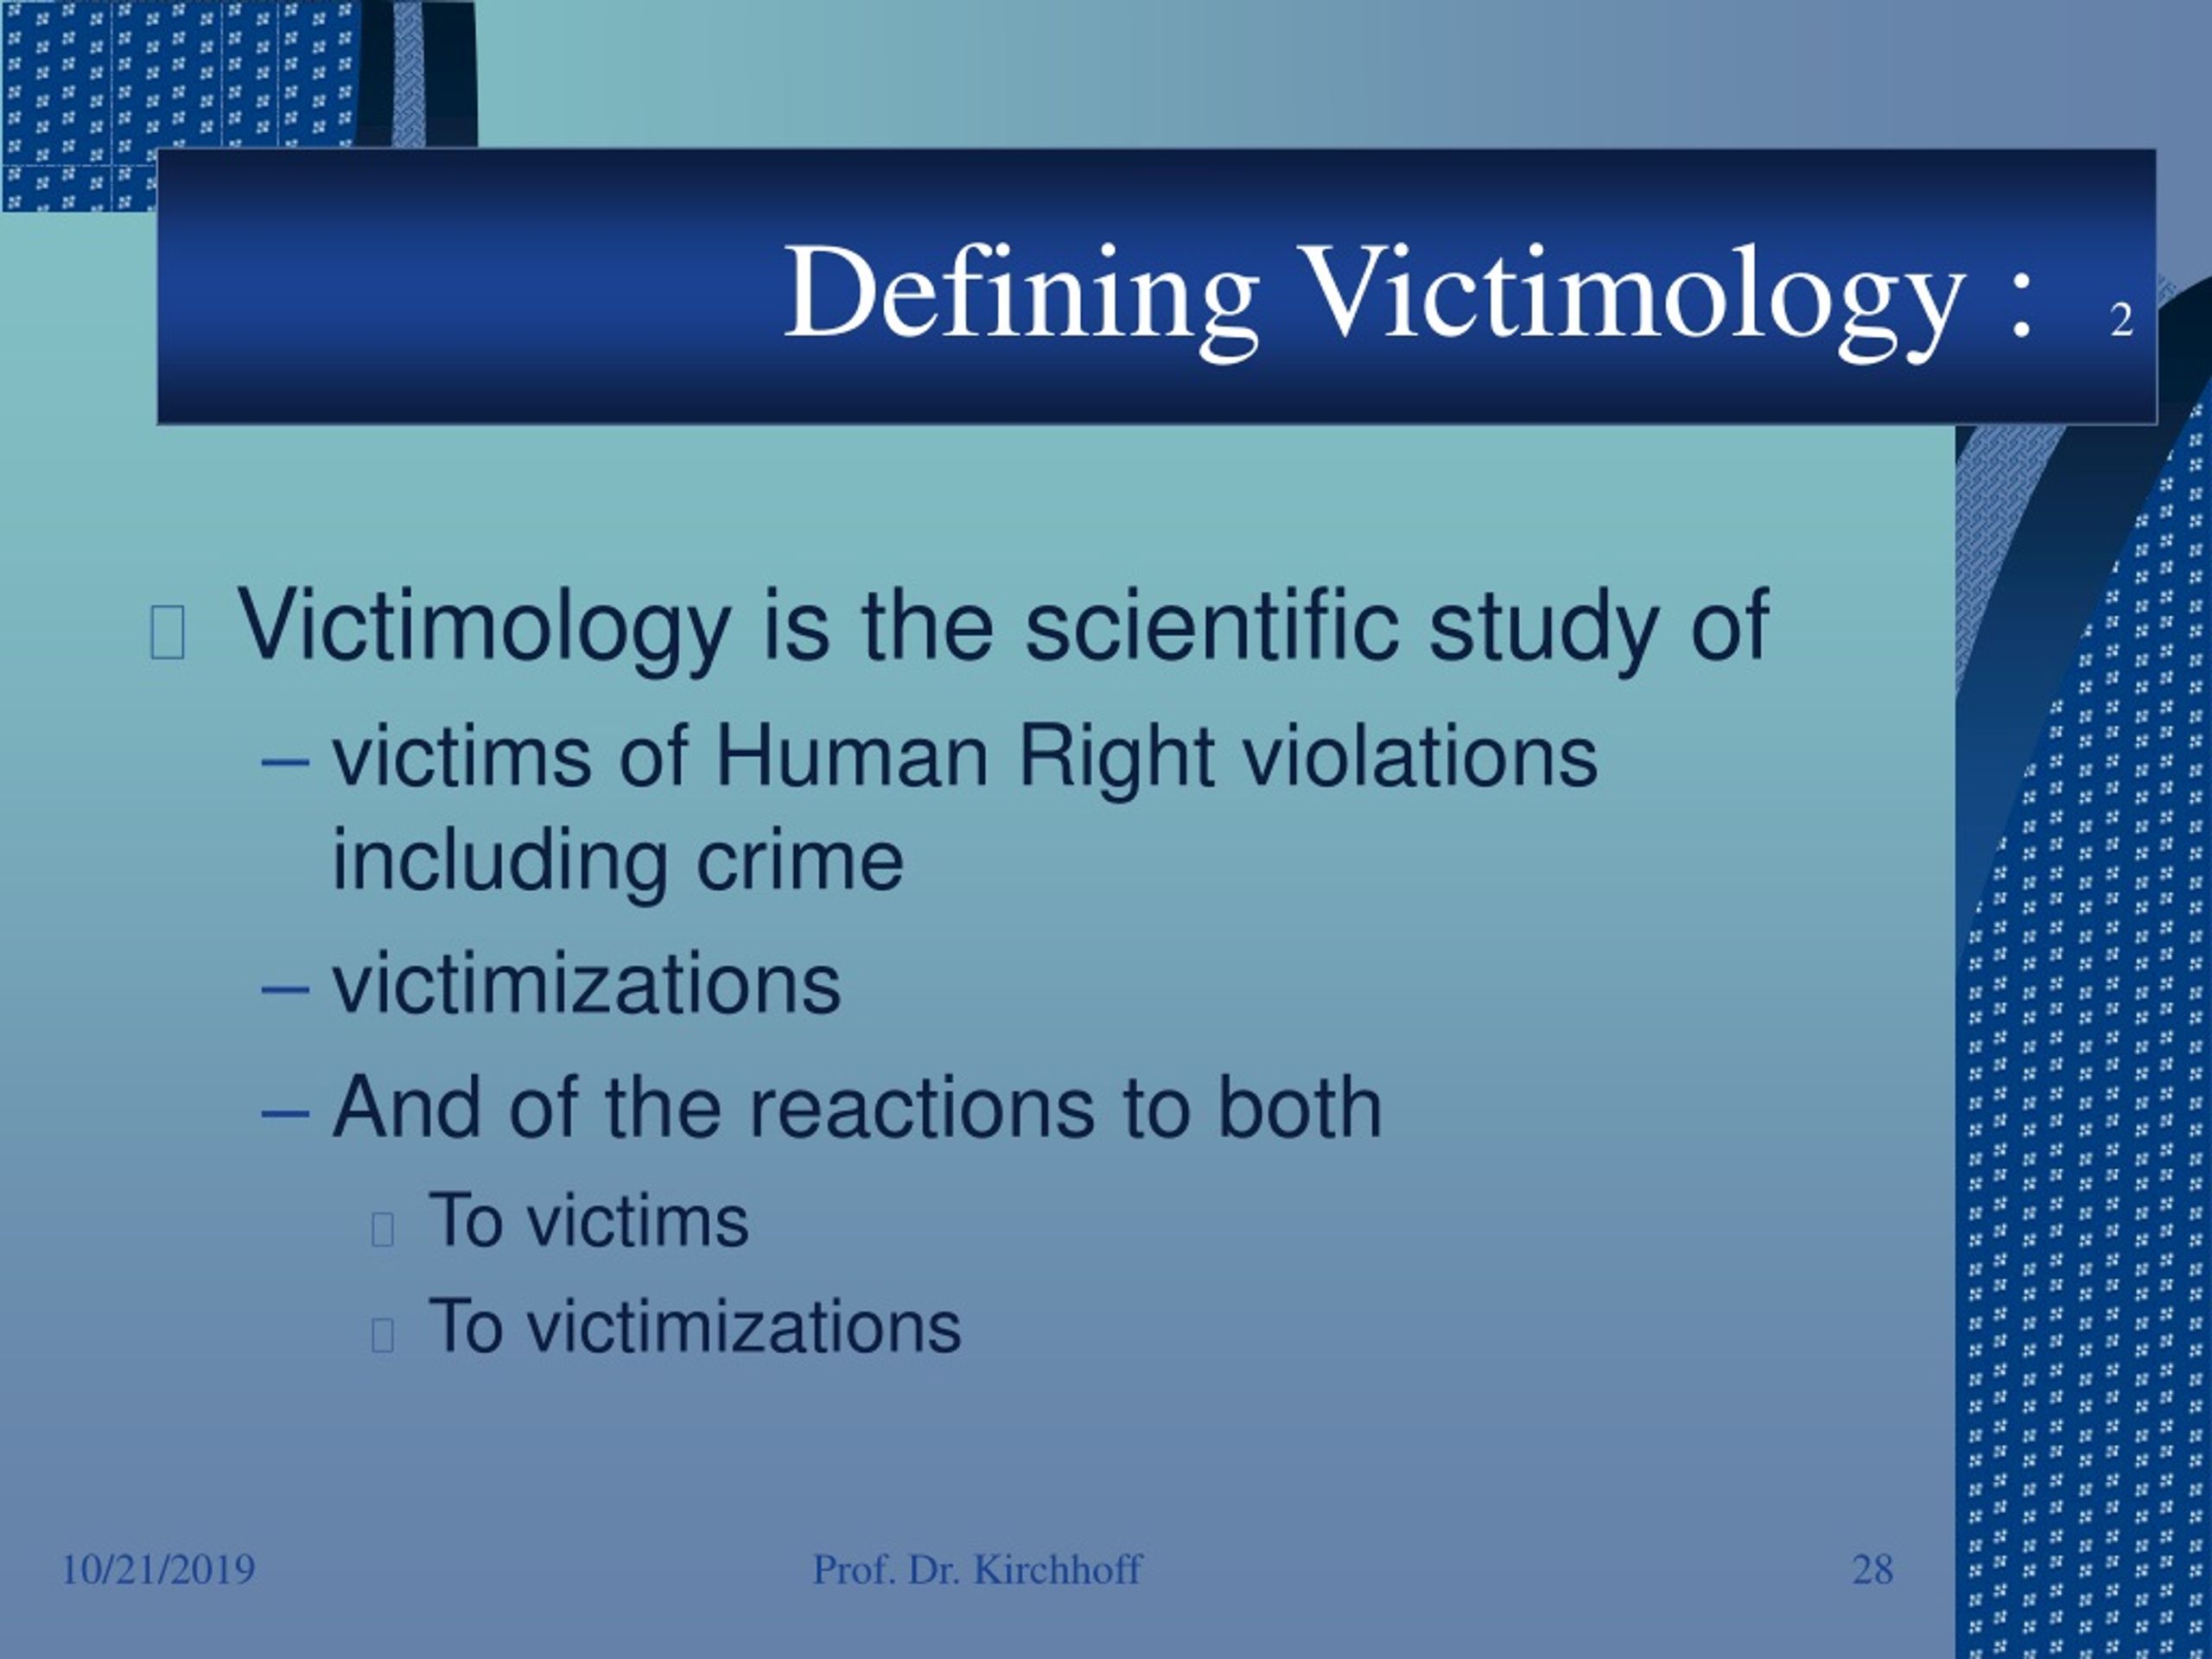 victimology research topics